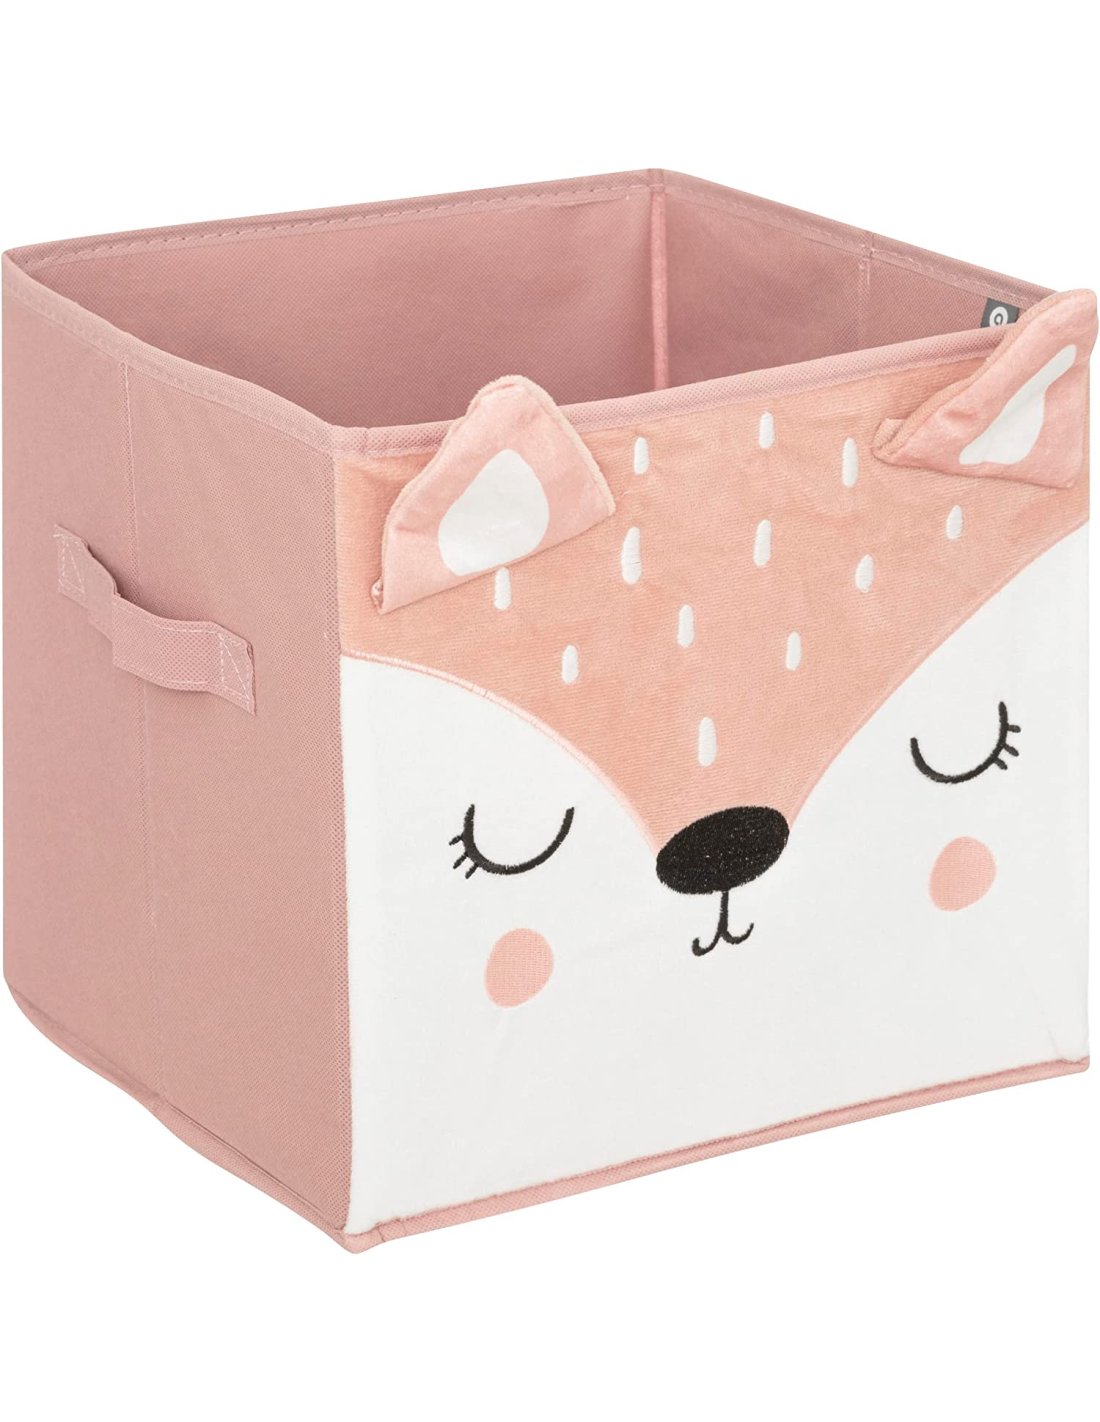 Caja infantil almacenaje Cesta cúbica para ropa niños Caja juguetes  plegable 4052025449896